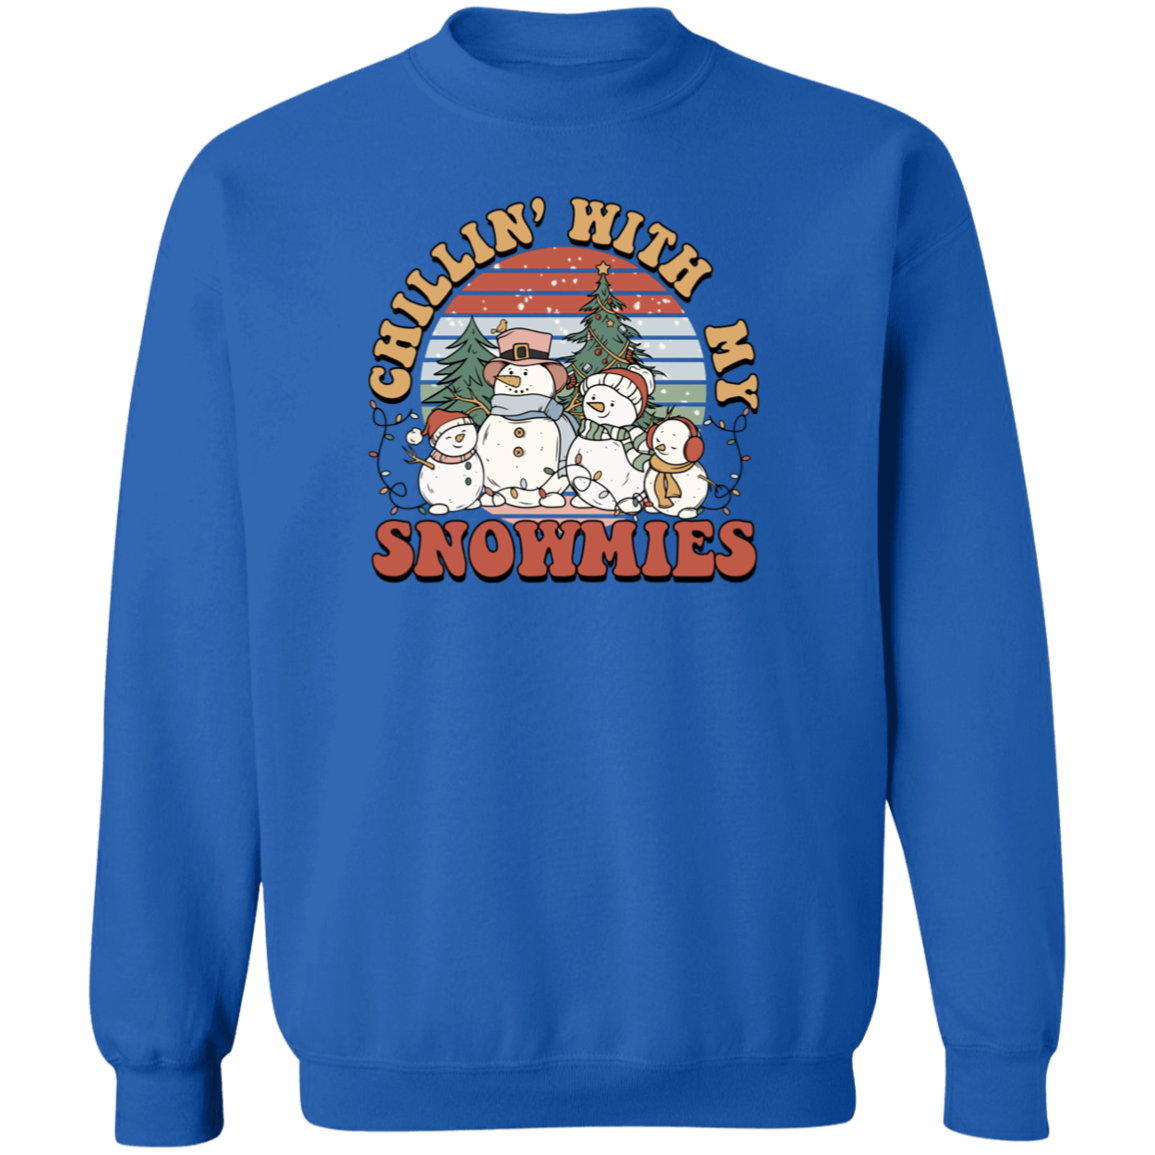 Chillin' With My Snowmies Sweatshirt